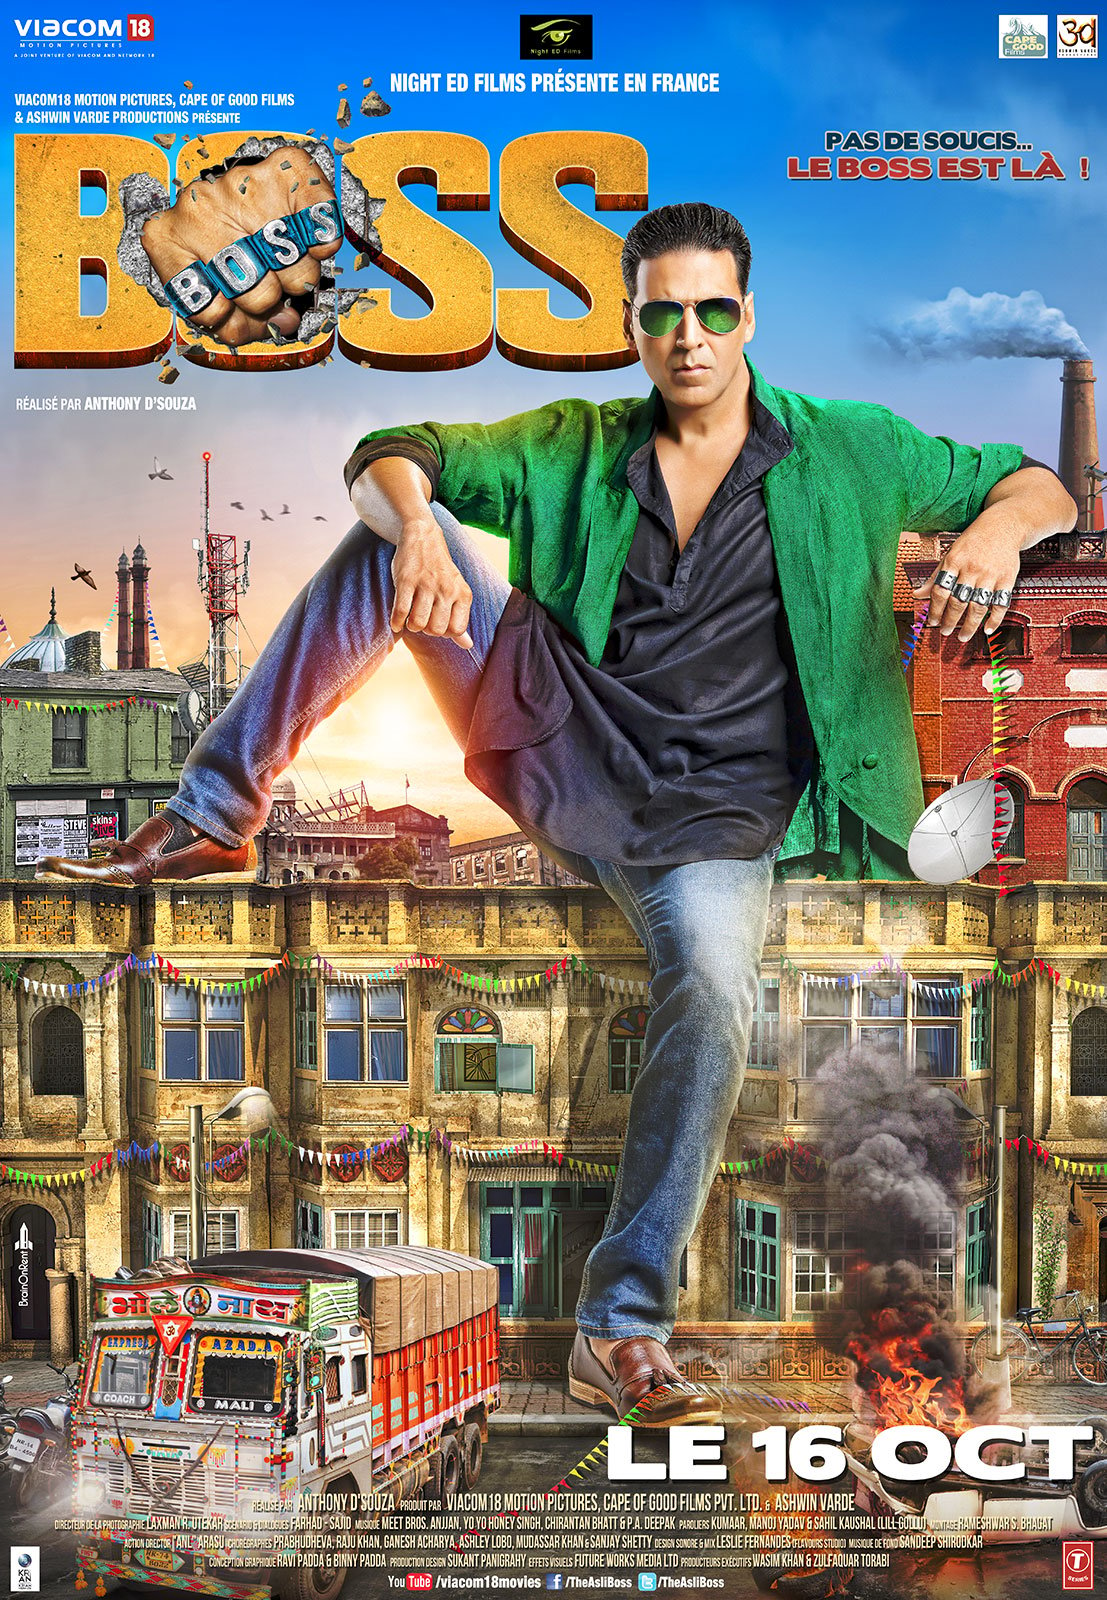 the boss 2016 full movie online free hd 123